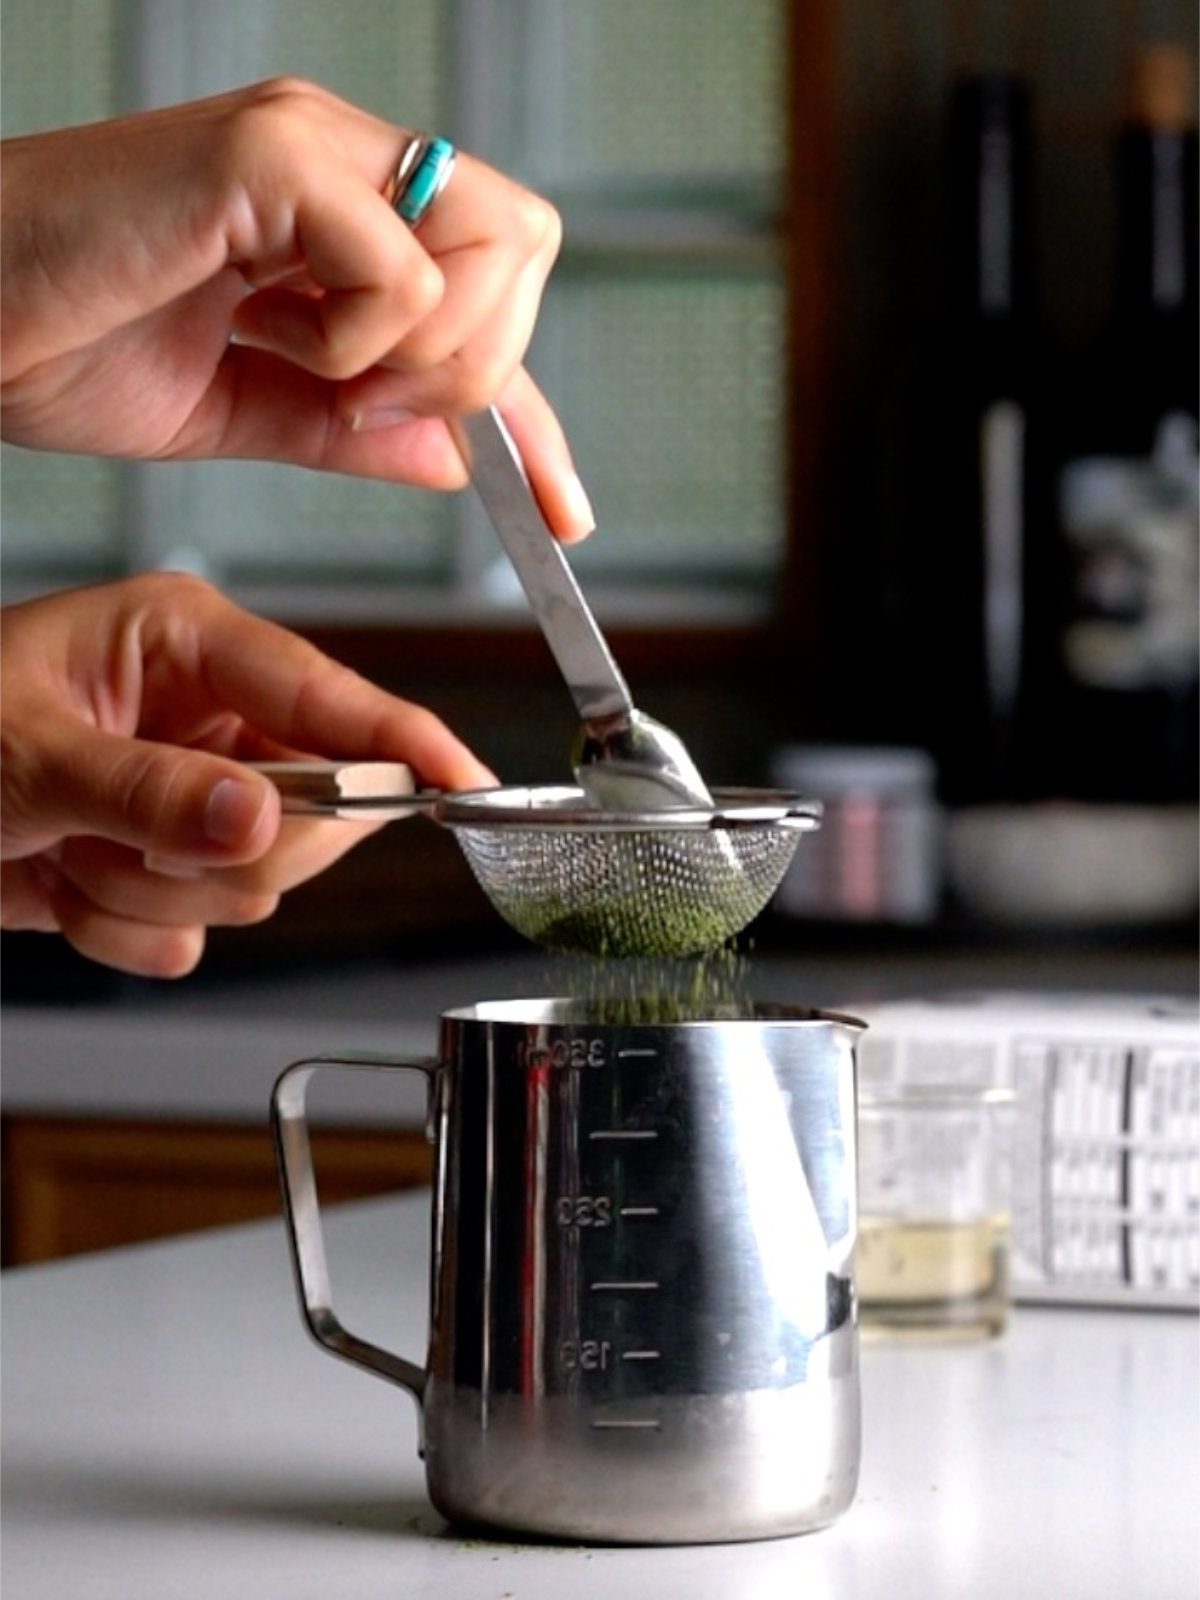 Sifting matcha powder into a metal measuring cup.